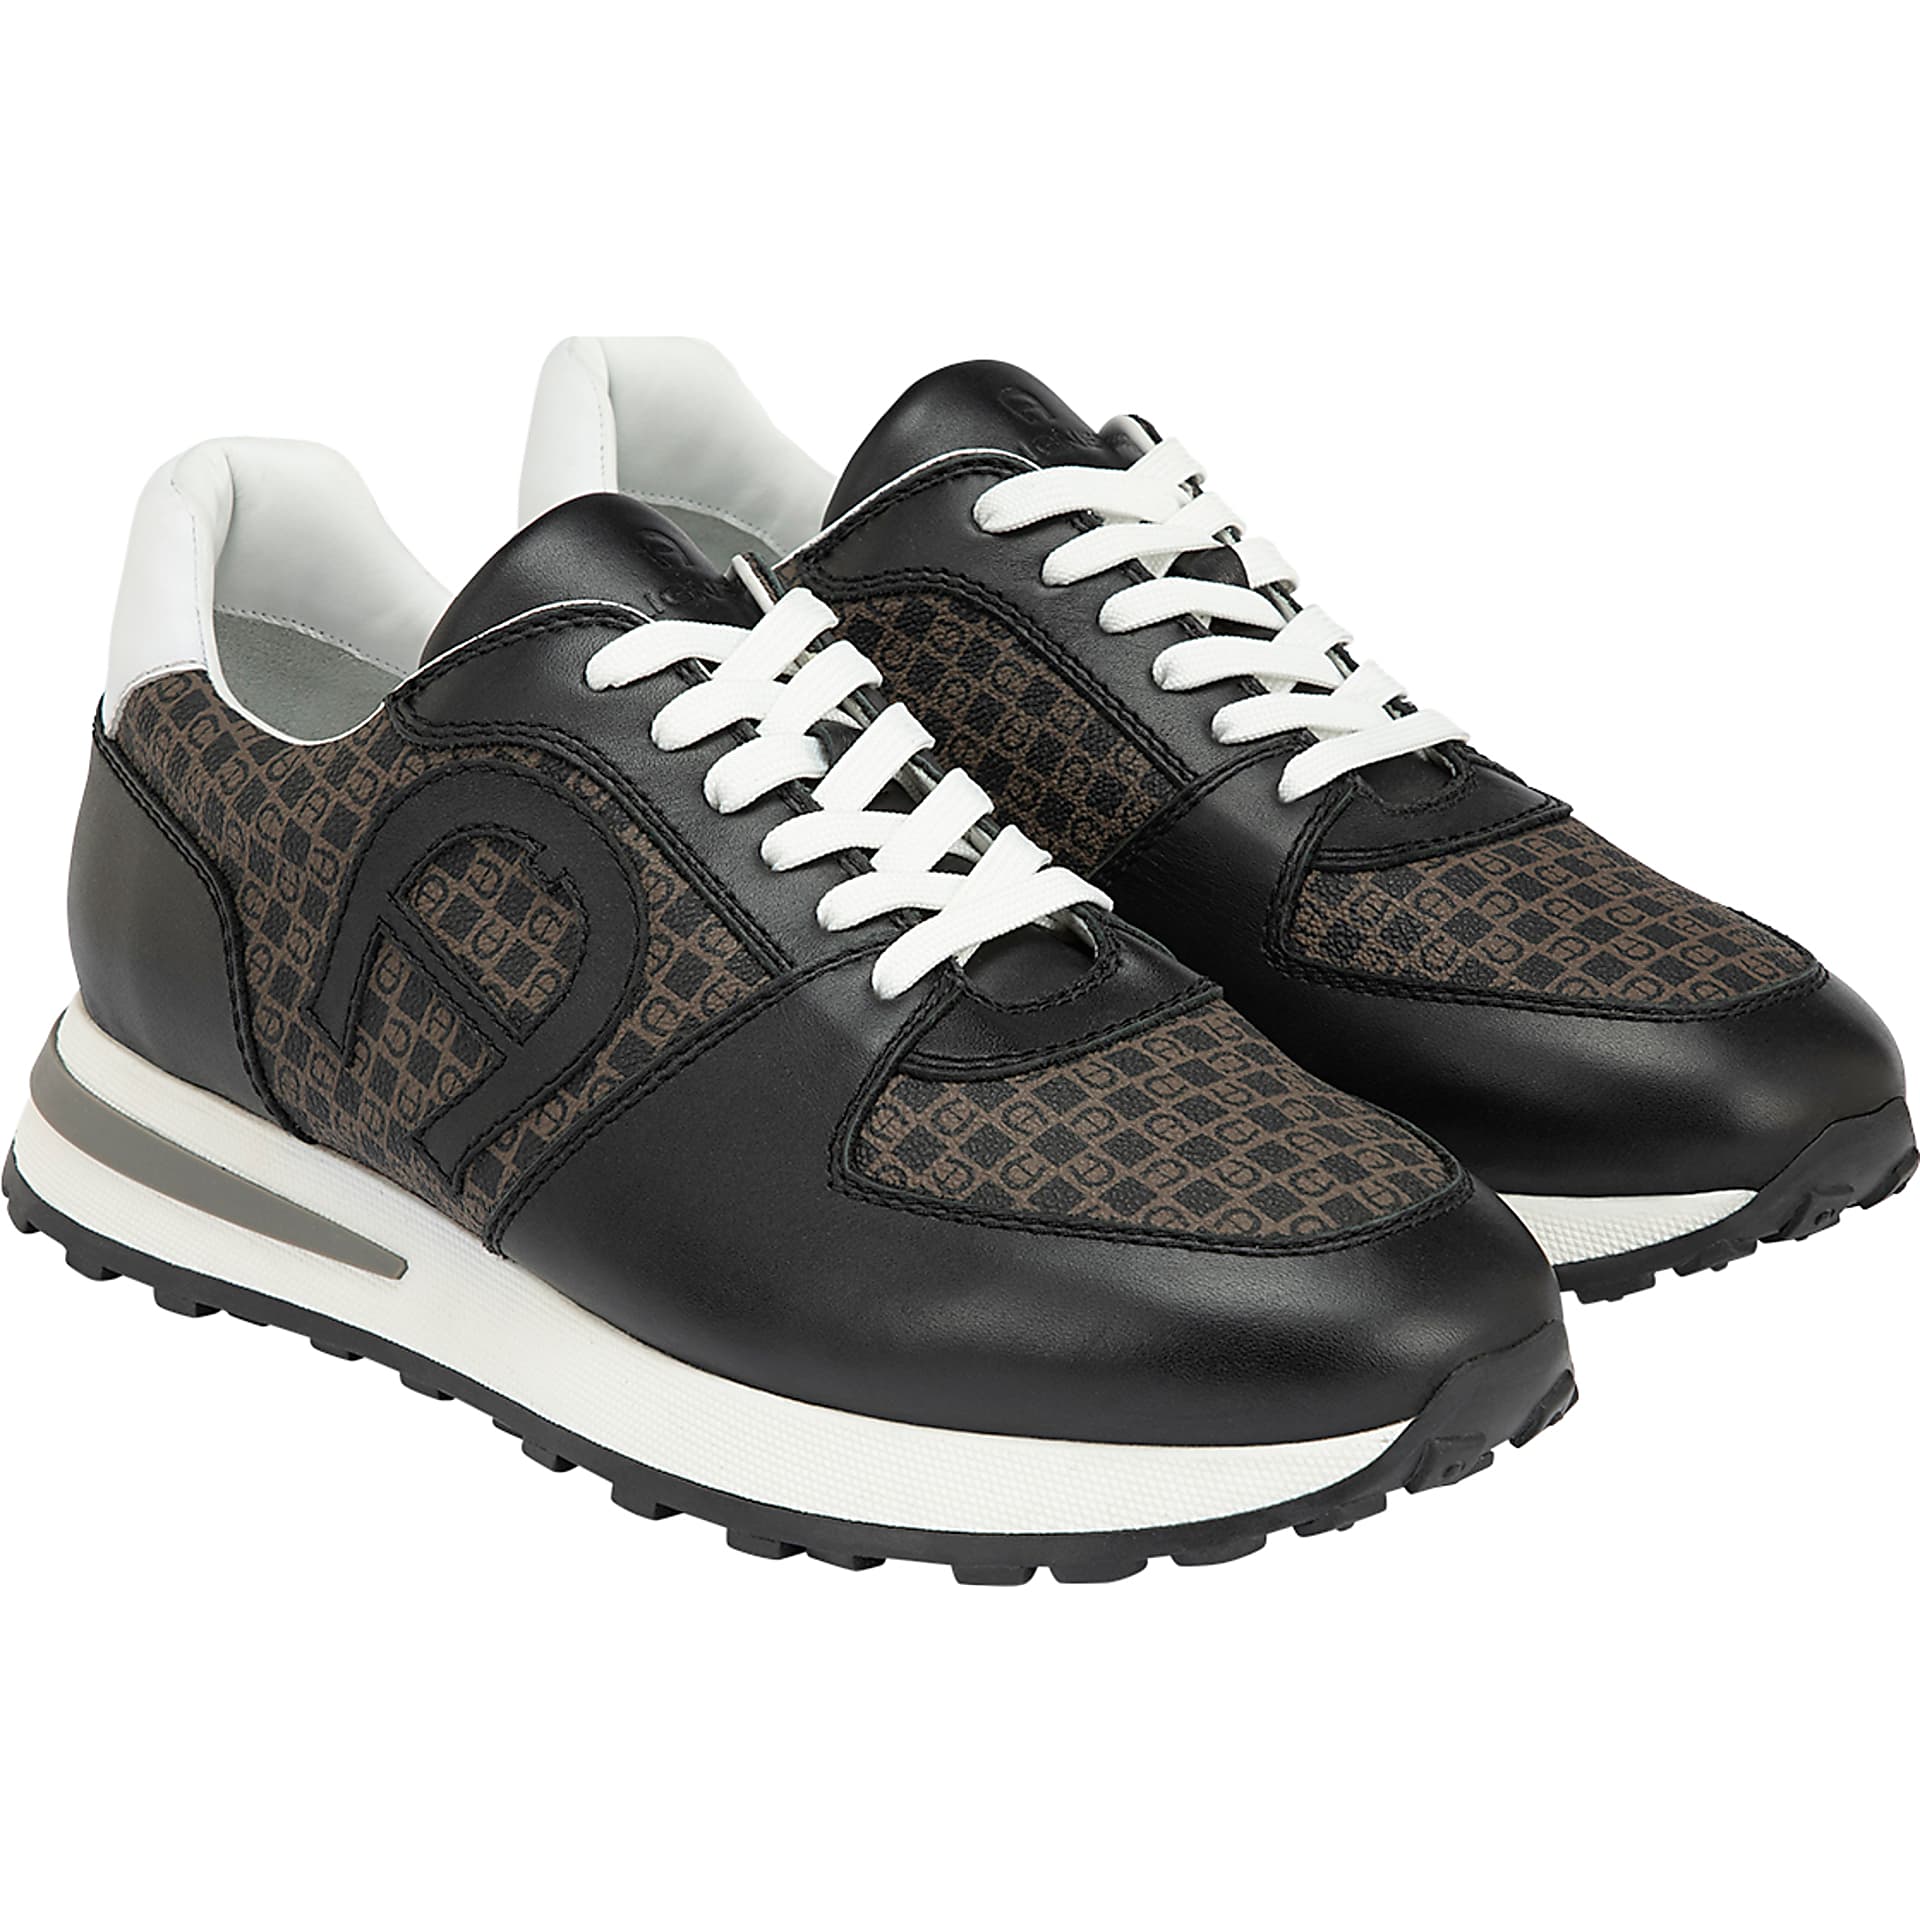 Terence Sneaker Dadino dadino brown - Shoes - Men - AIGNER Club